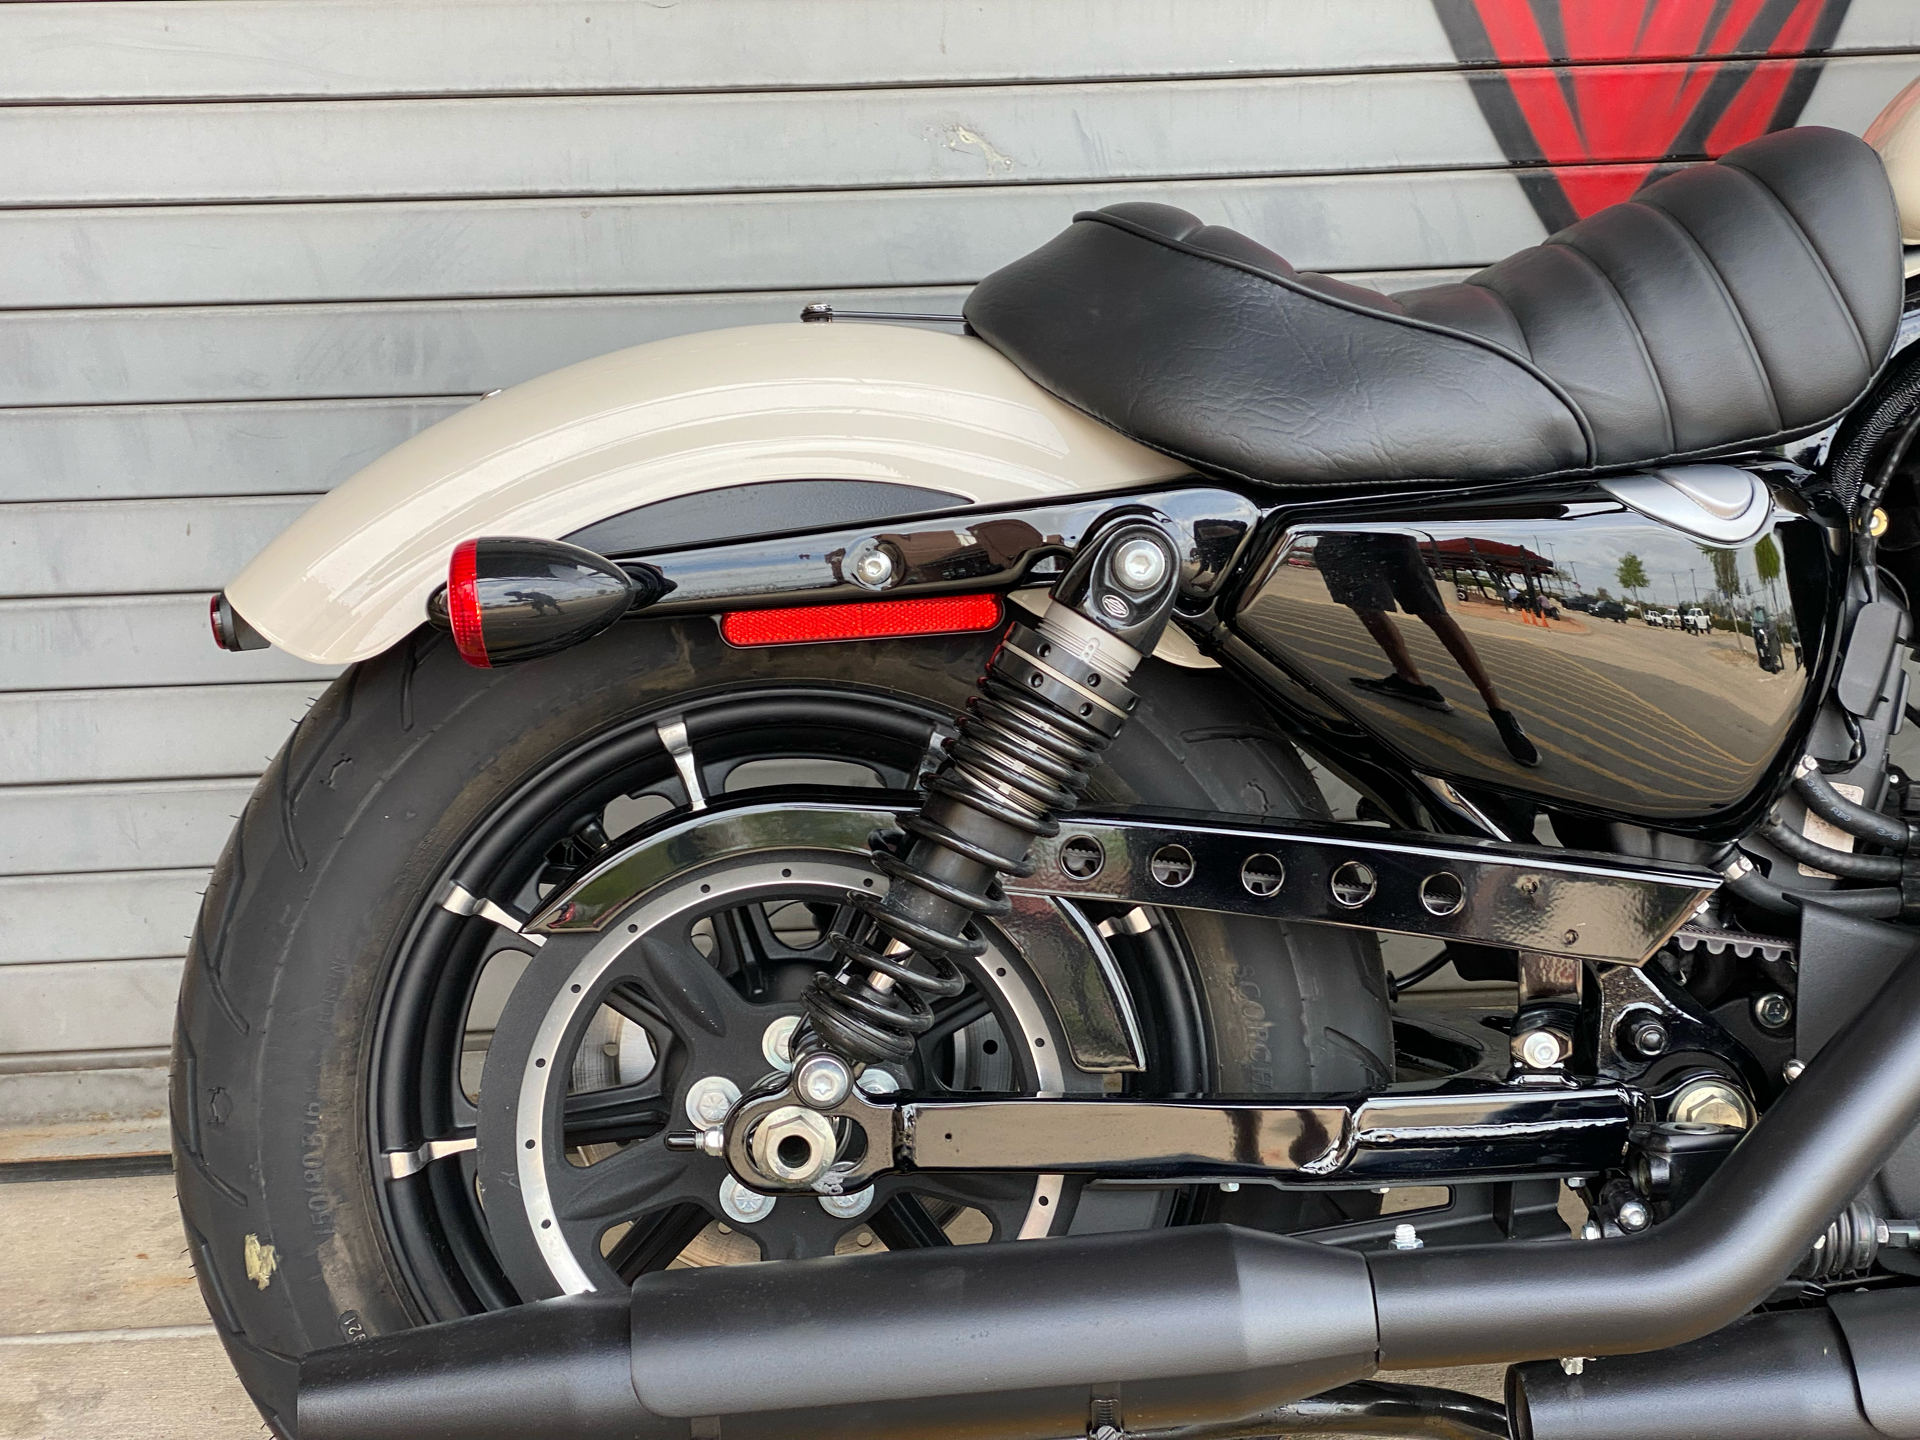 2022 Harley-Davidson Iron 883™ in Carrollton, Texas - Photo 5